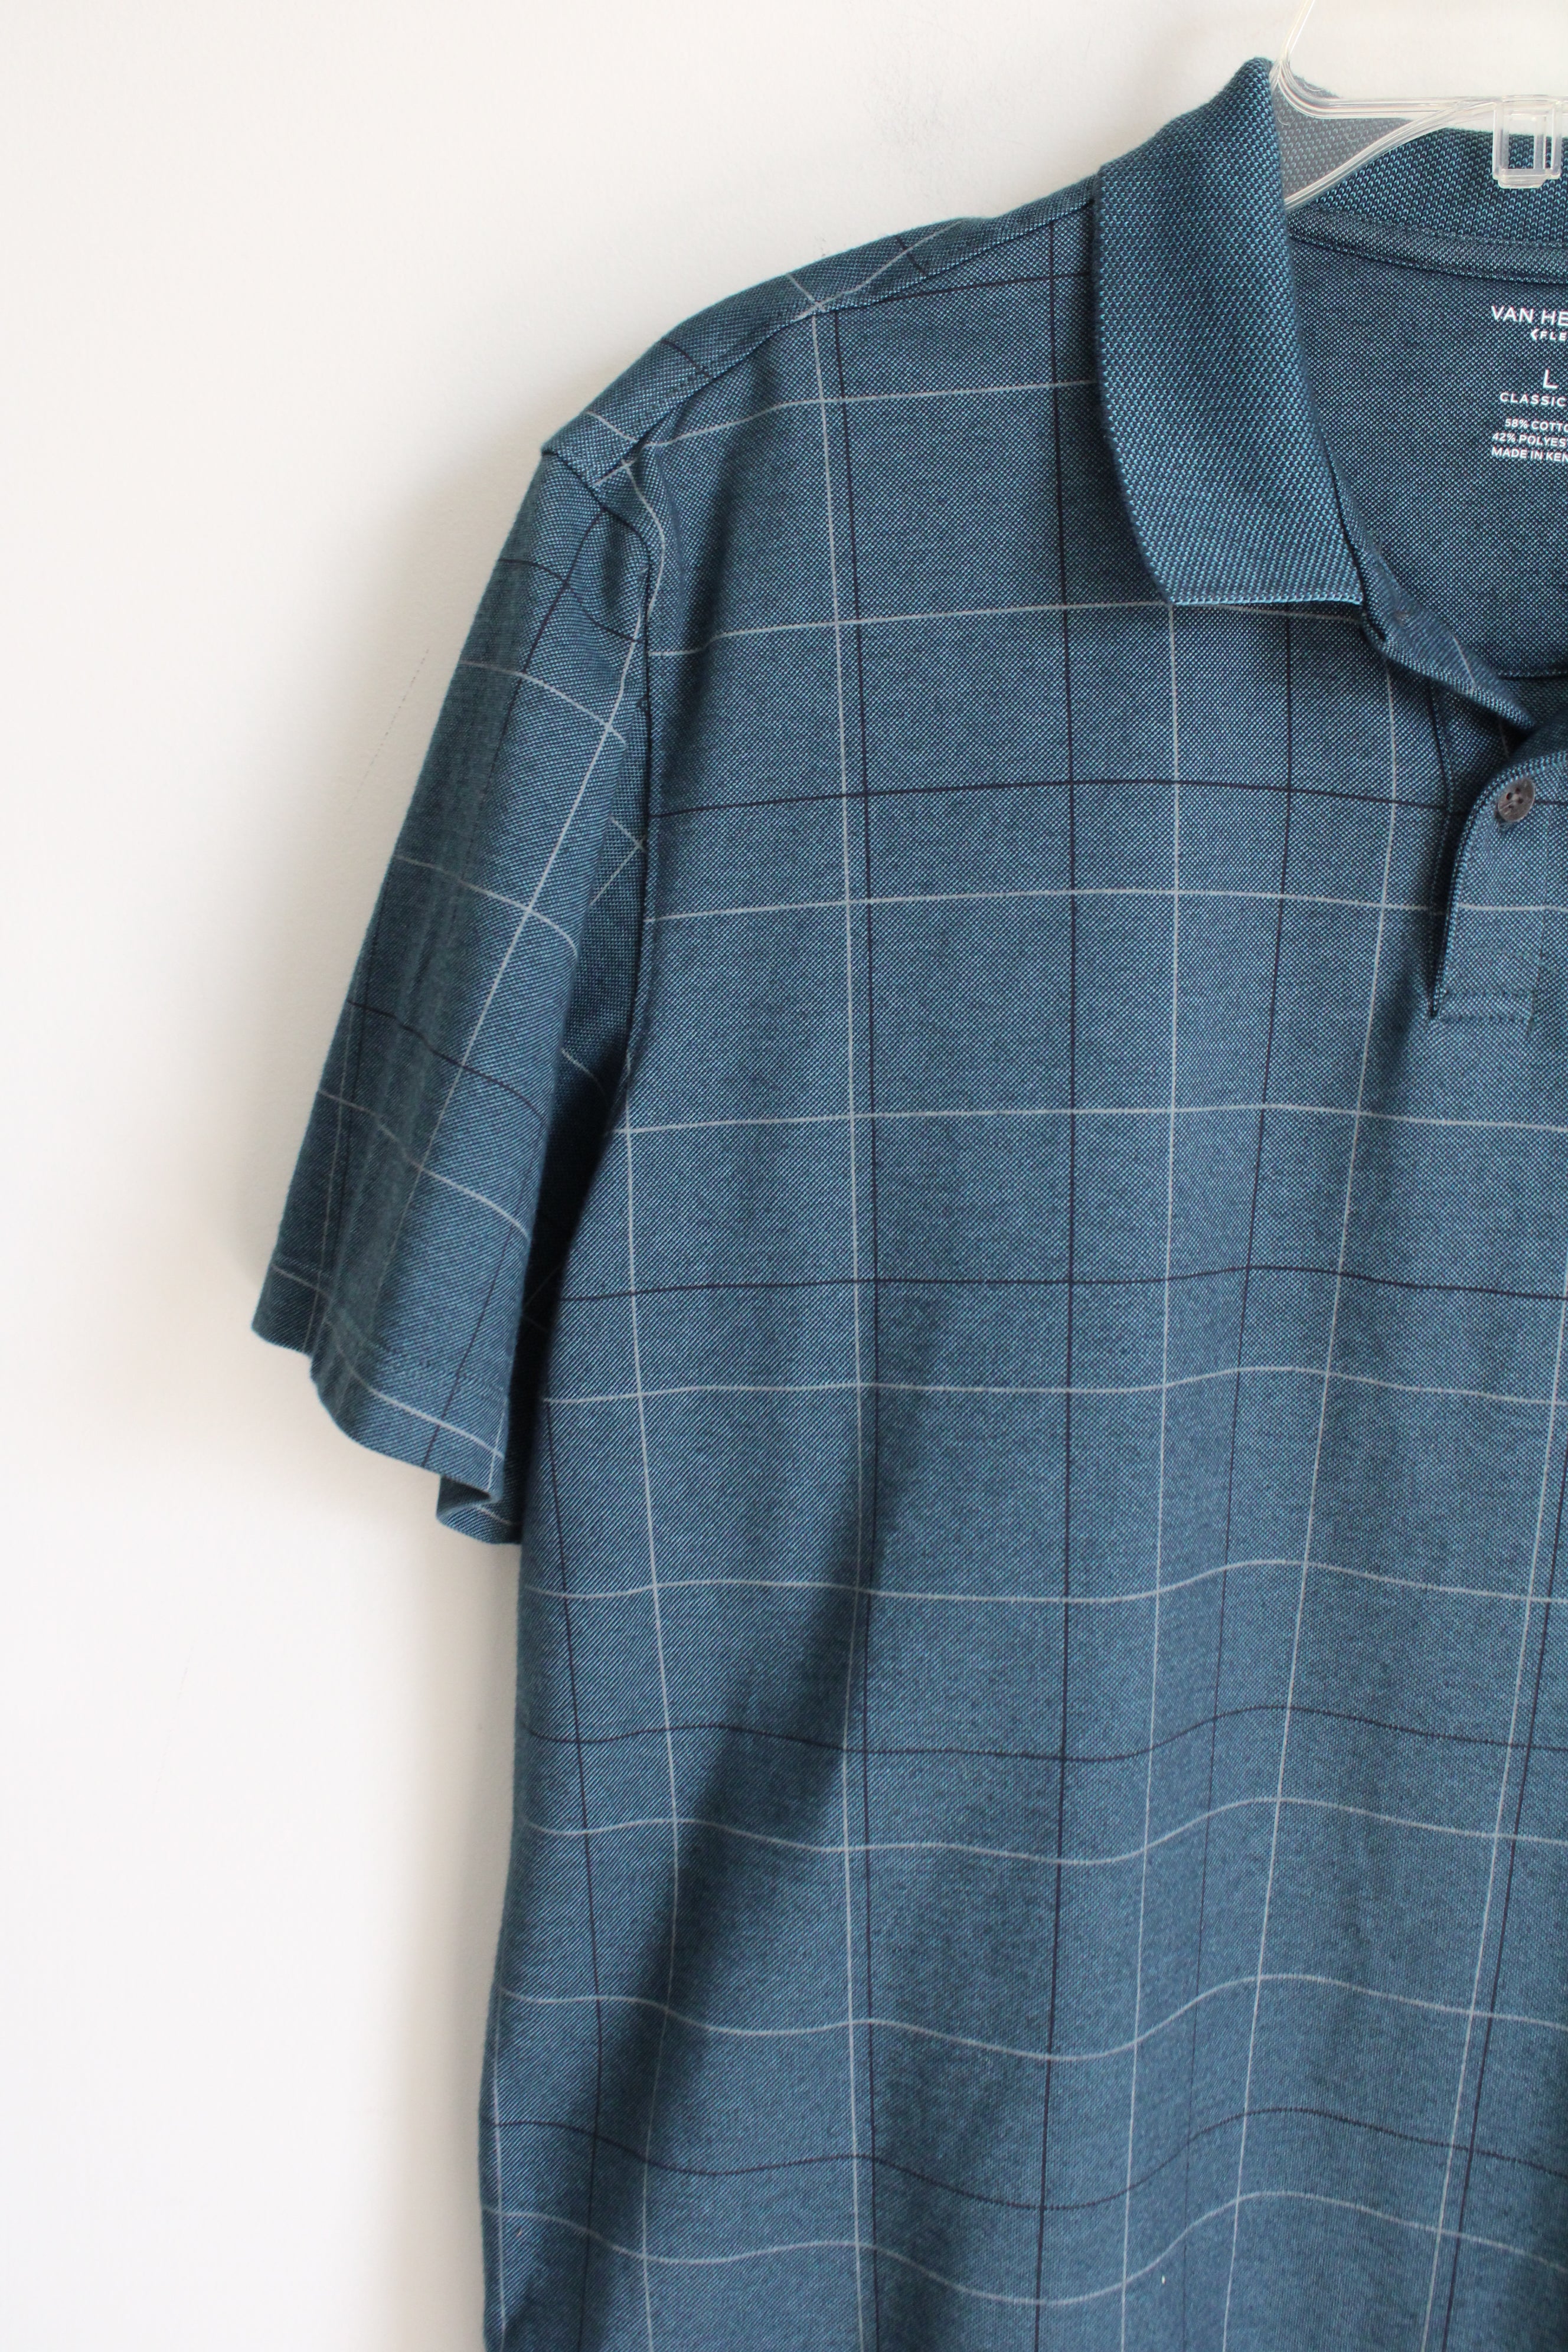 Van Heusen Flex Teal Windowpane Classic Fit Polo Shirt | L